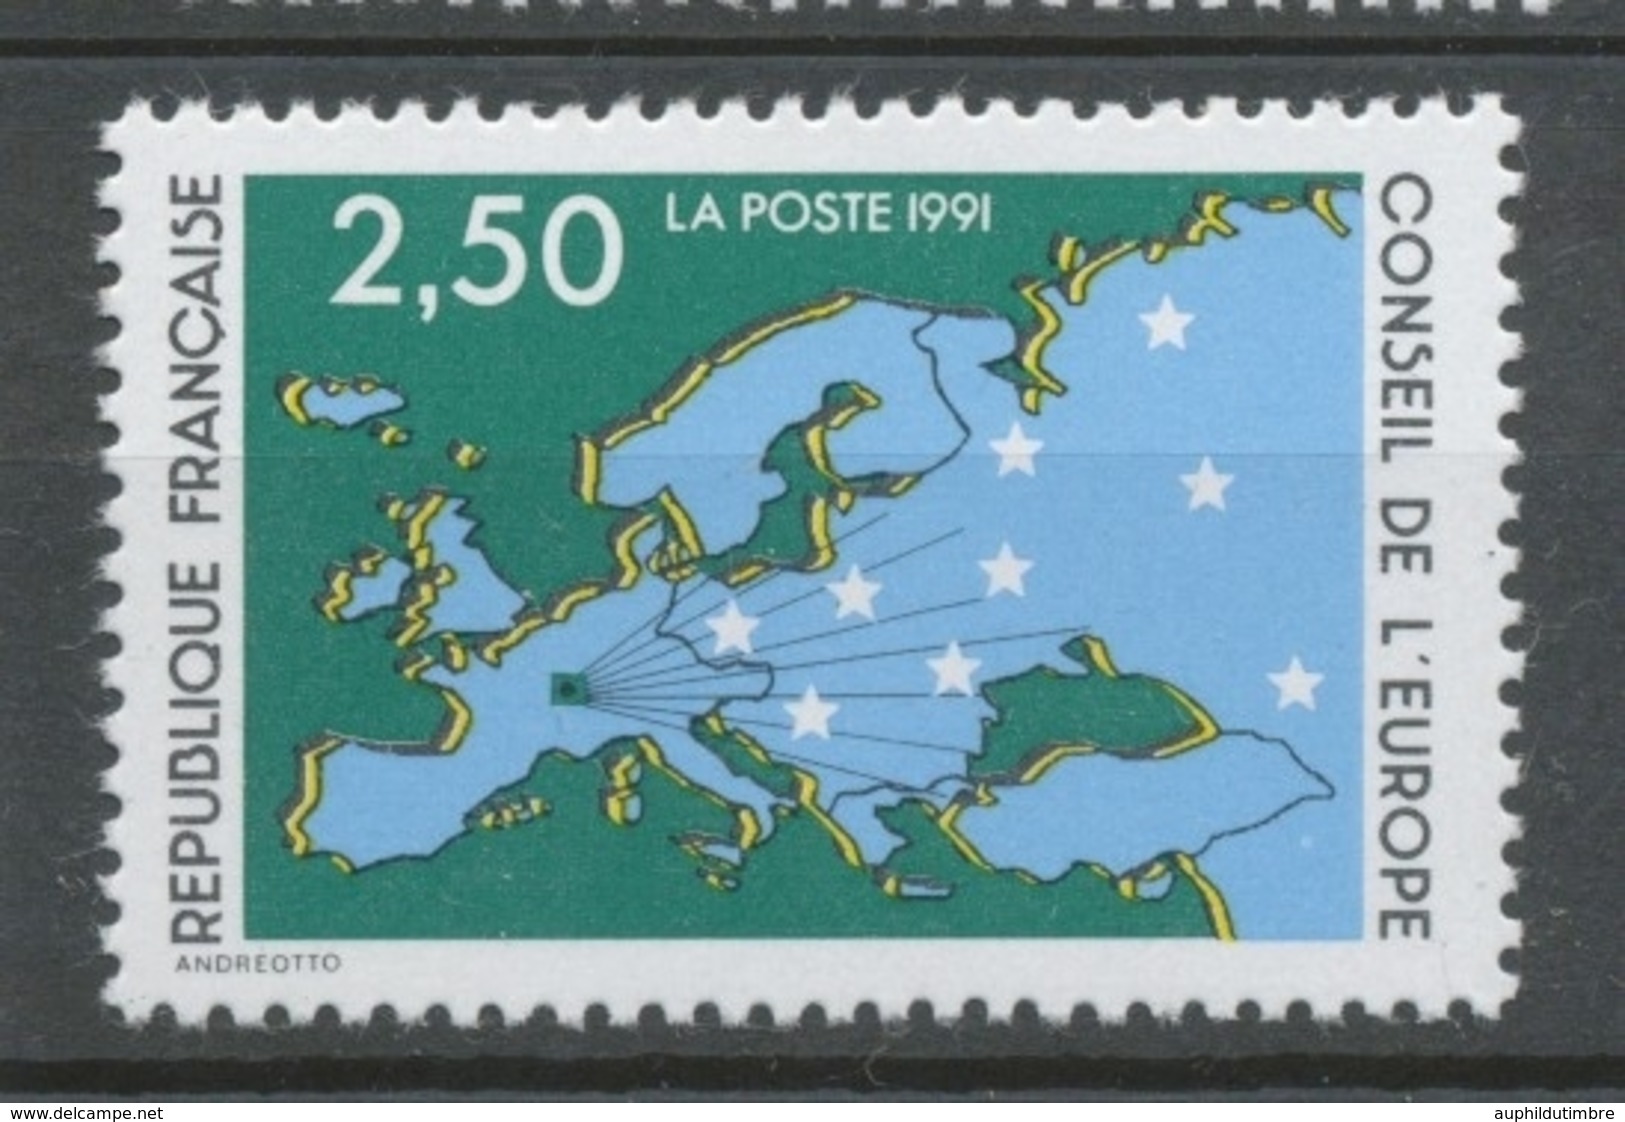 Service N°106 Conseil De L' Europe. 2f.50  Multicolore ZS106 - Ungebraucht